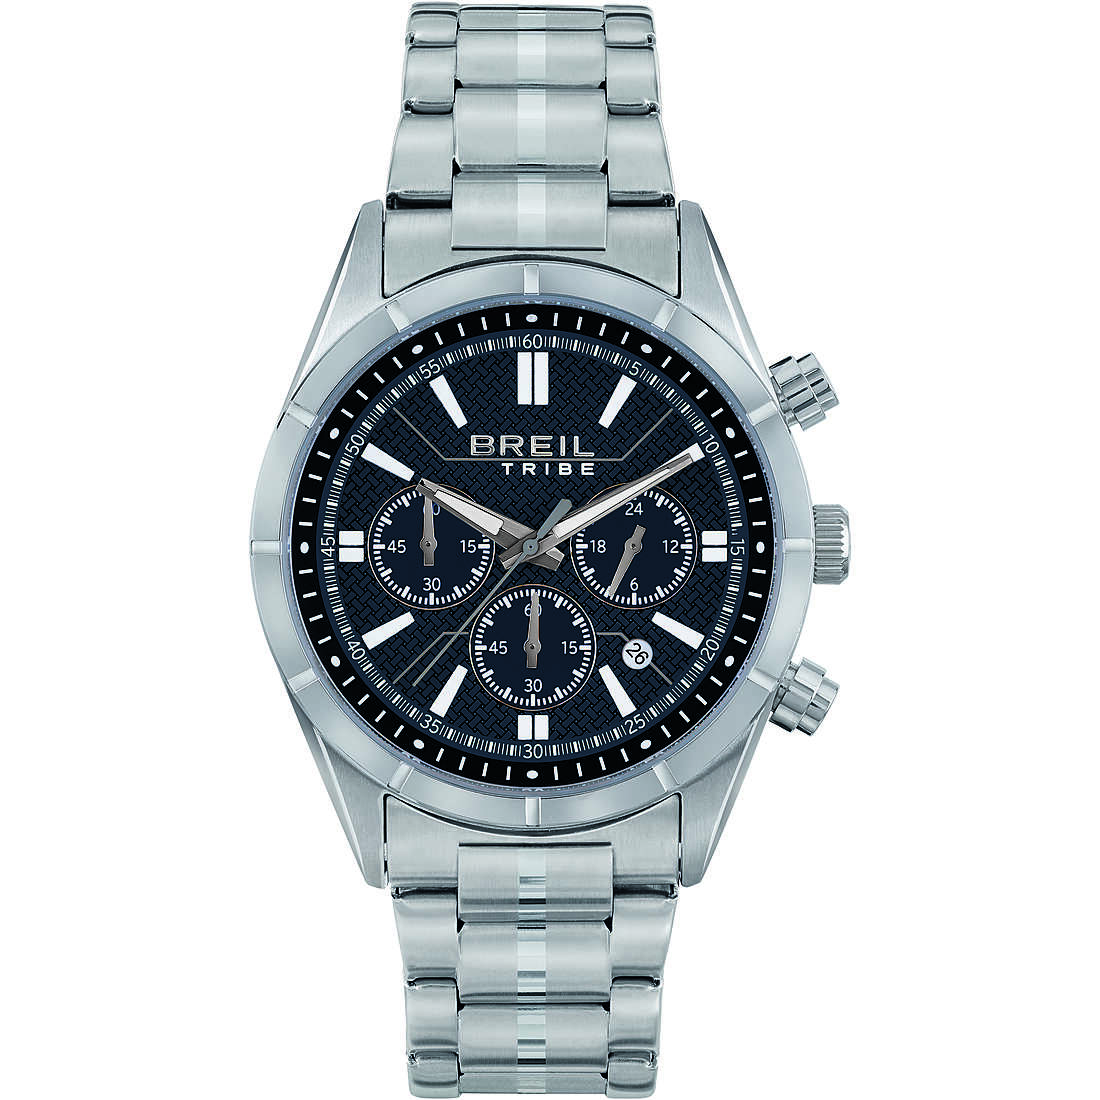 chronographe montre Acier Cadran Bleu homme EW0525